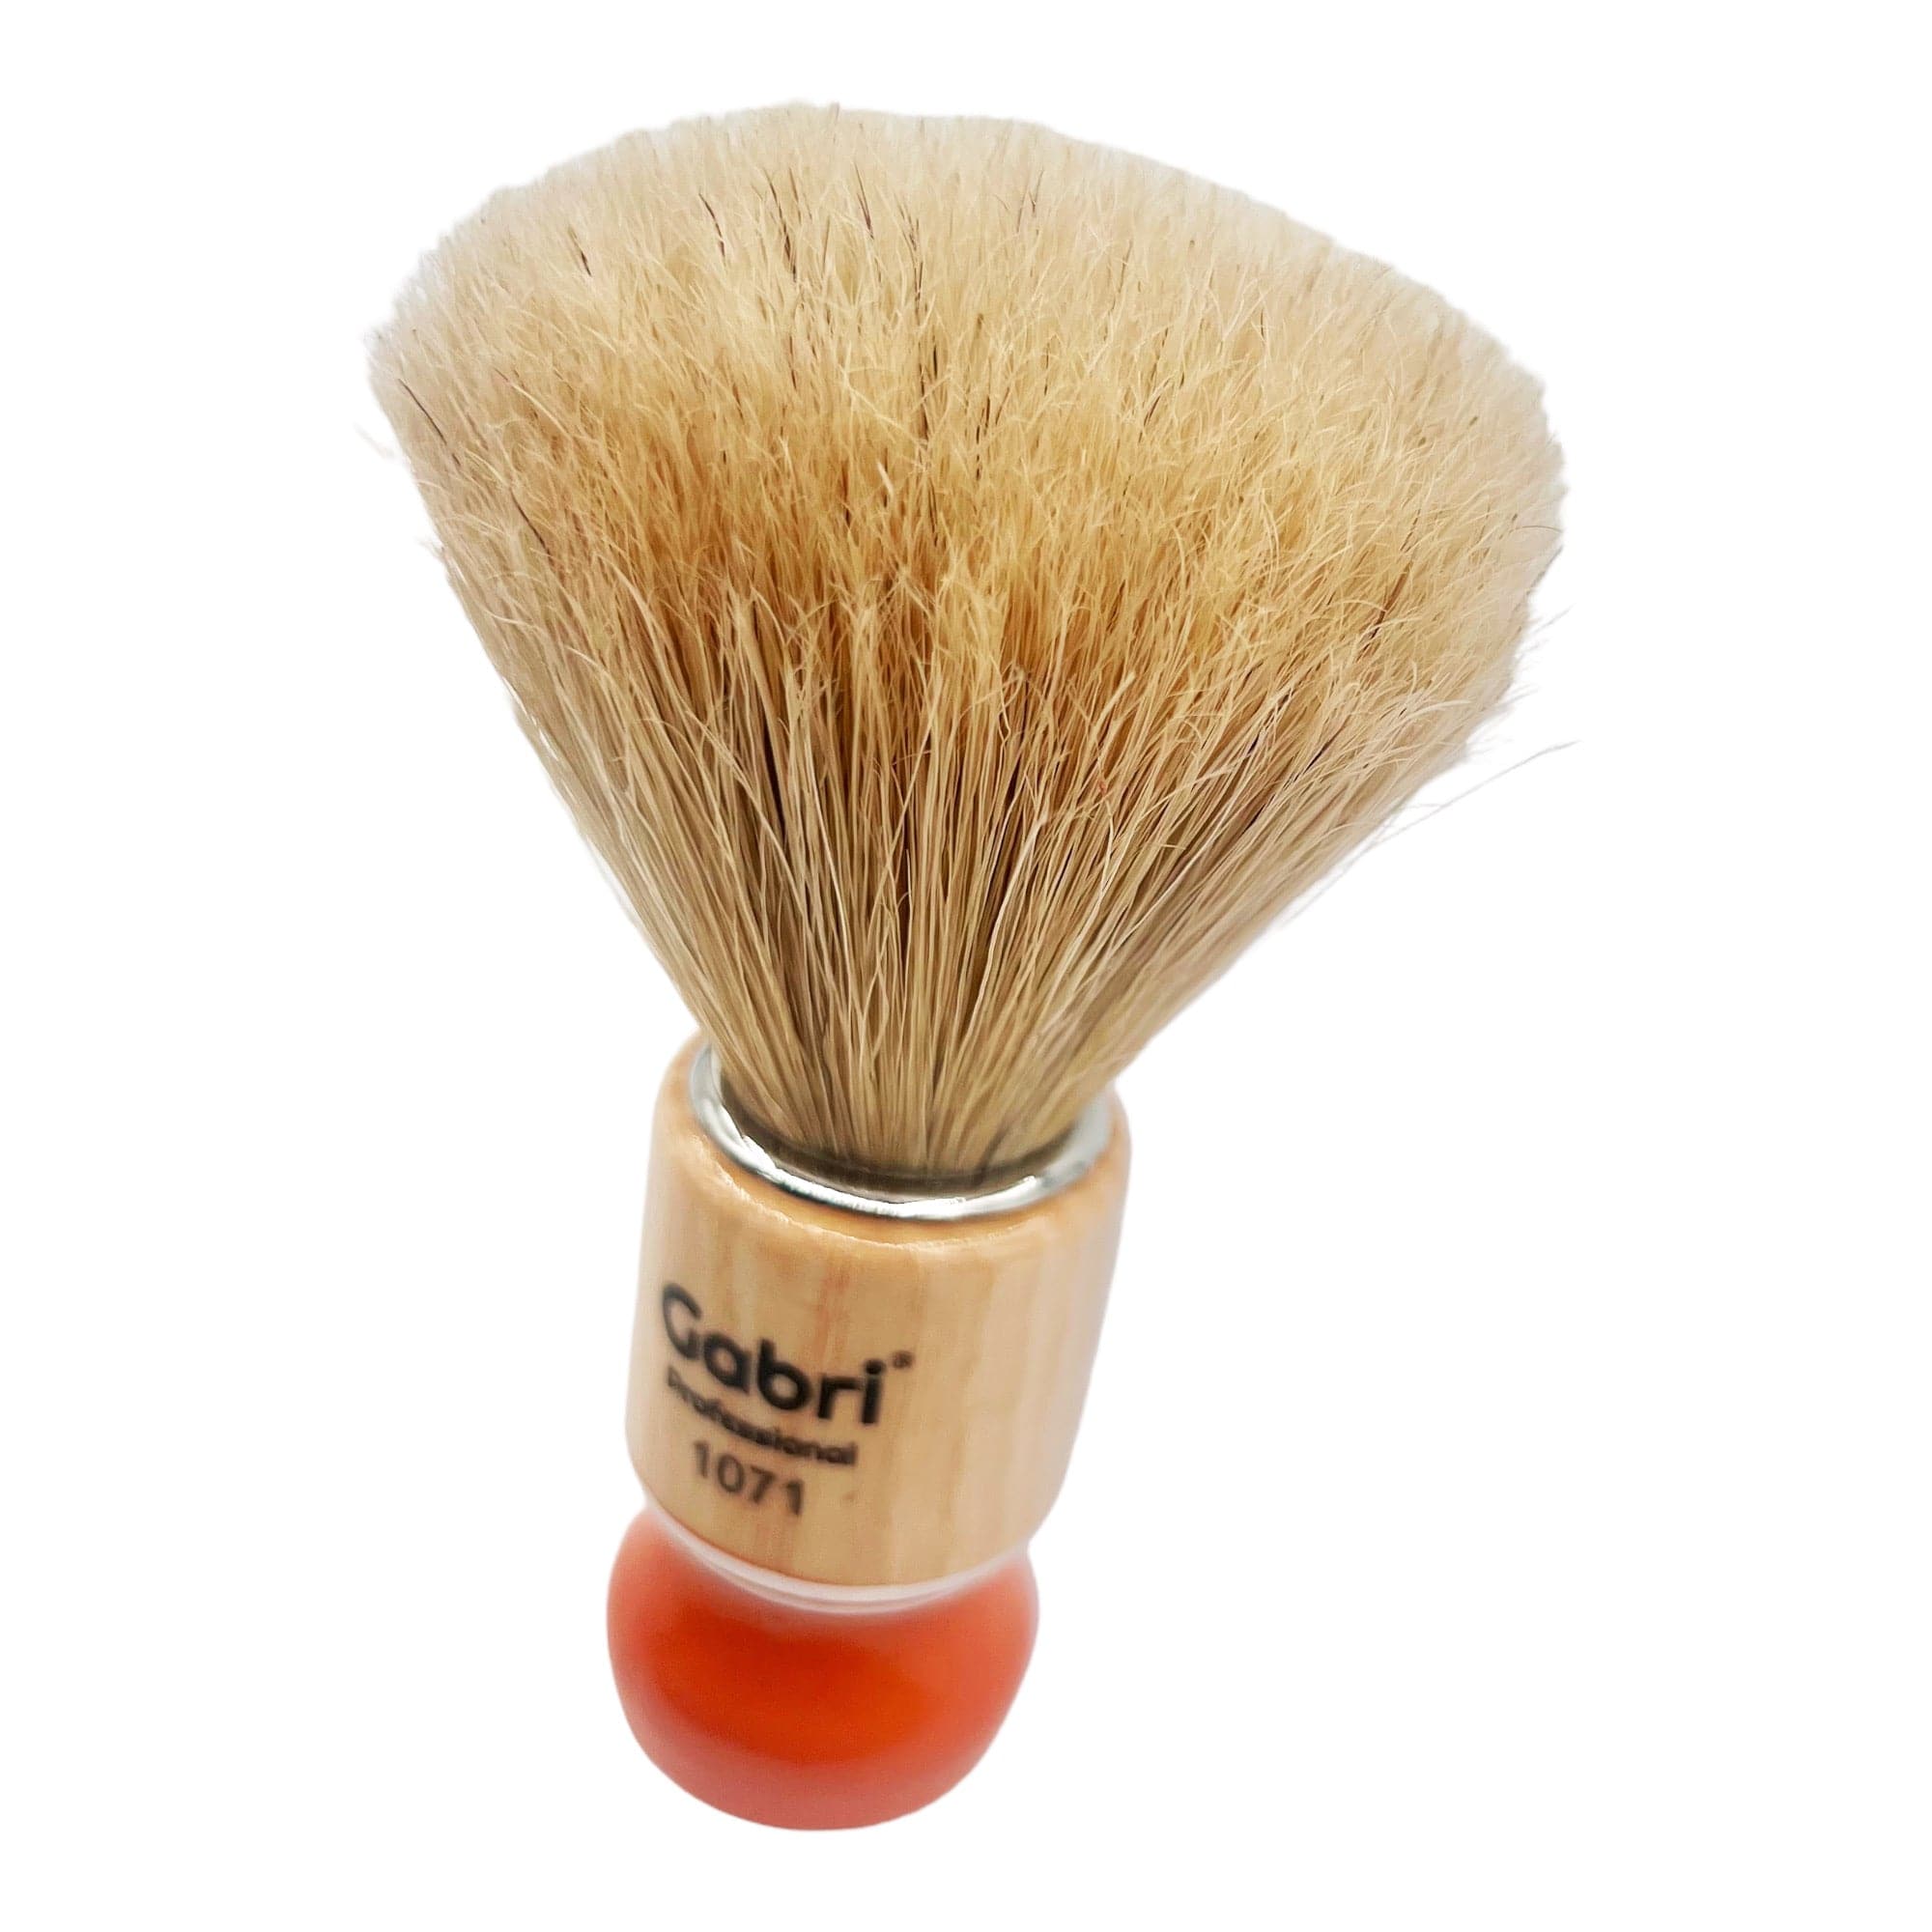 Gabri - Shaving Brush Authentic Wooden Hand Made 1071 (Orange) 13.5cm